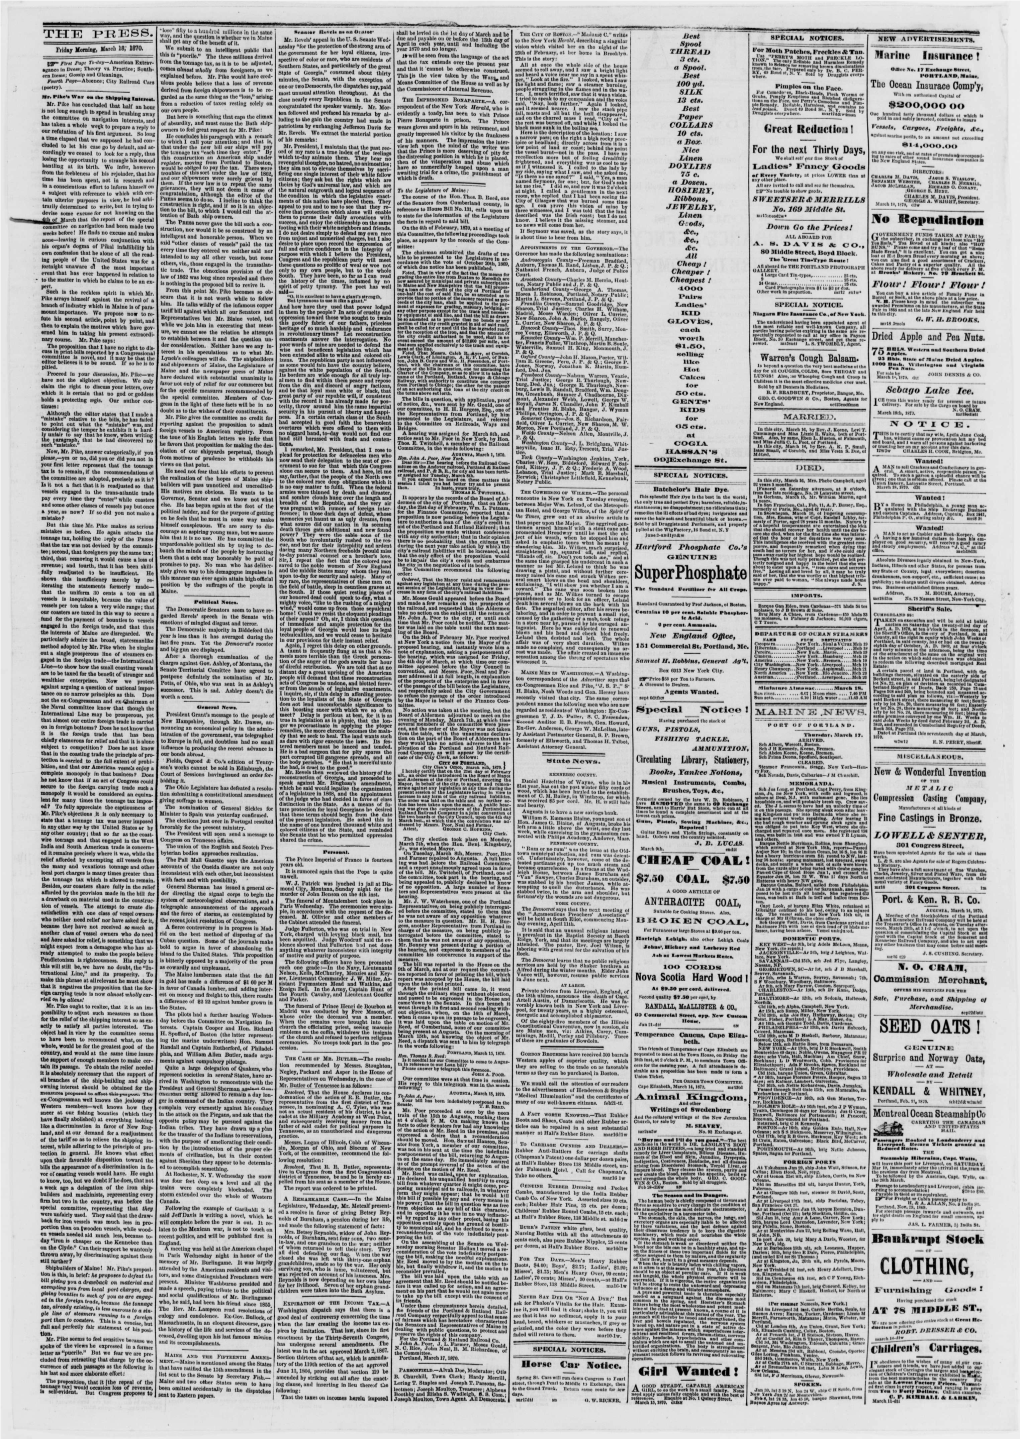 Portland Daily Press (Portland, Me.). 1870-03-18 [P ]